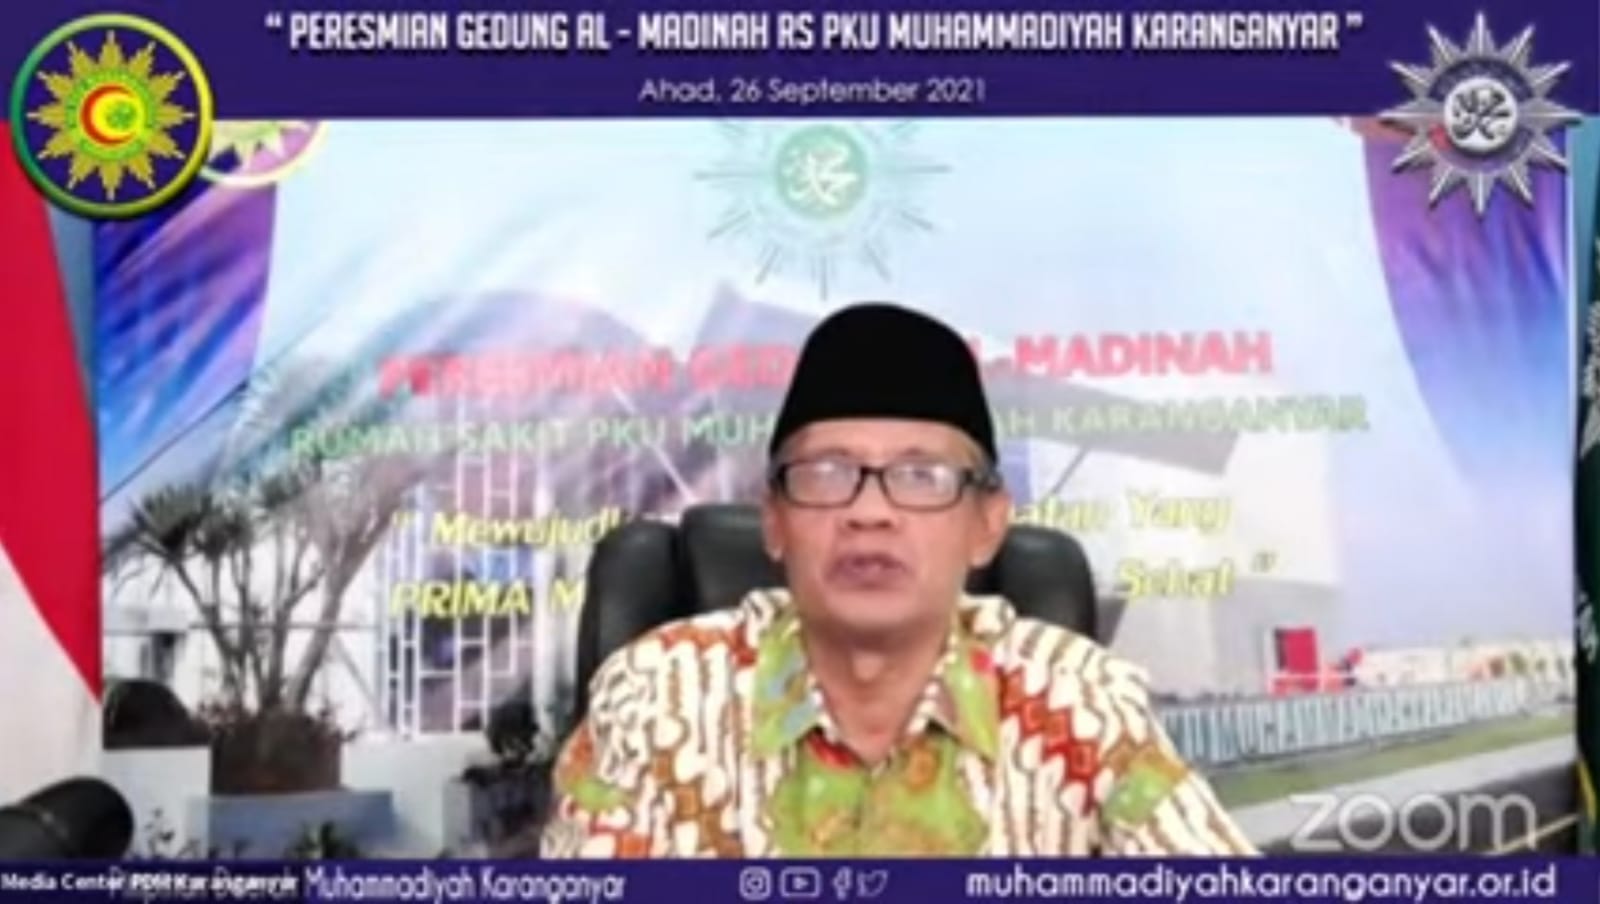 Haedar Nashir Ketua Umum Muhammadiyah, dalam peresmian gedung RS PKU Muhammadiyah Karanganyar